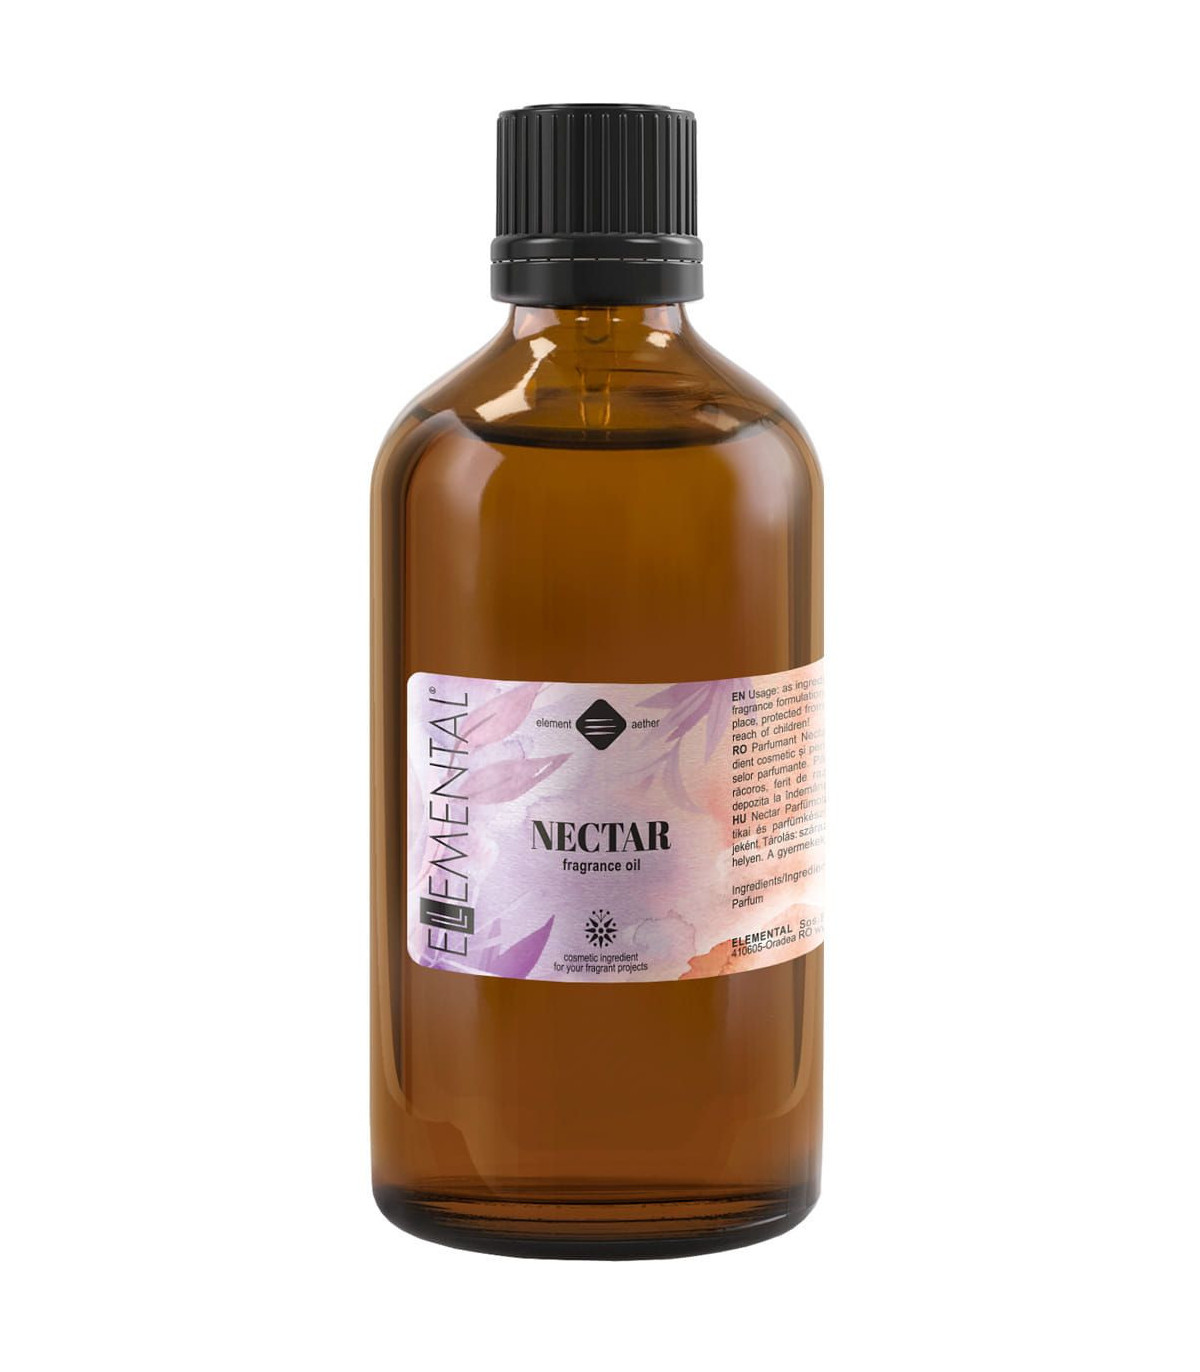 Nectar Fragrance oil